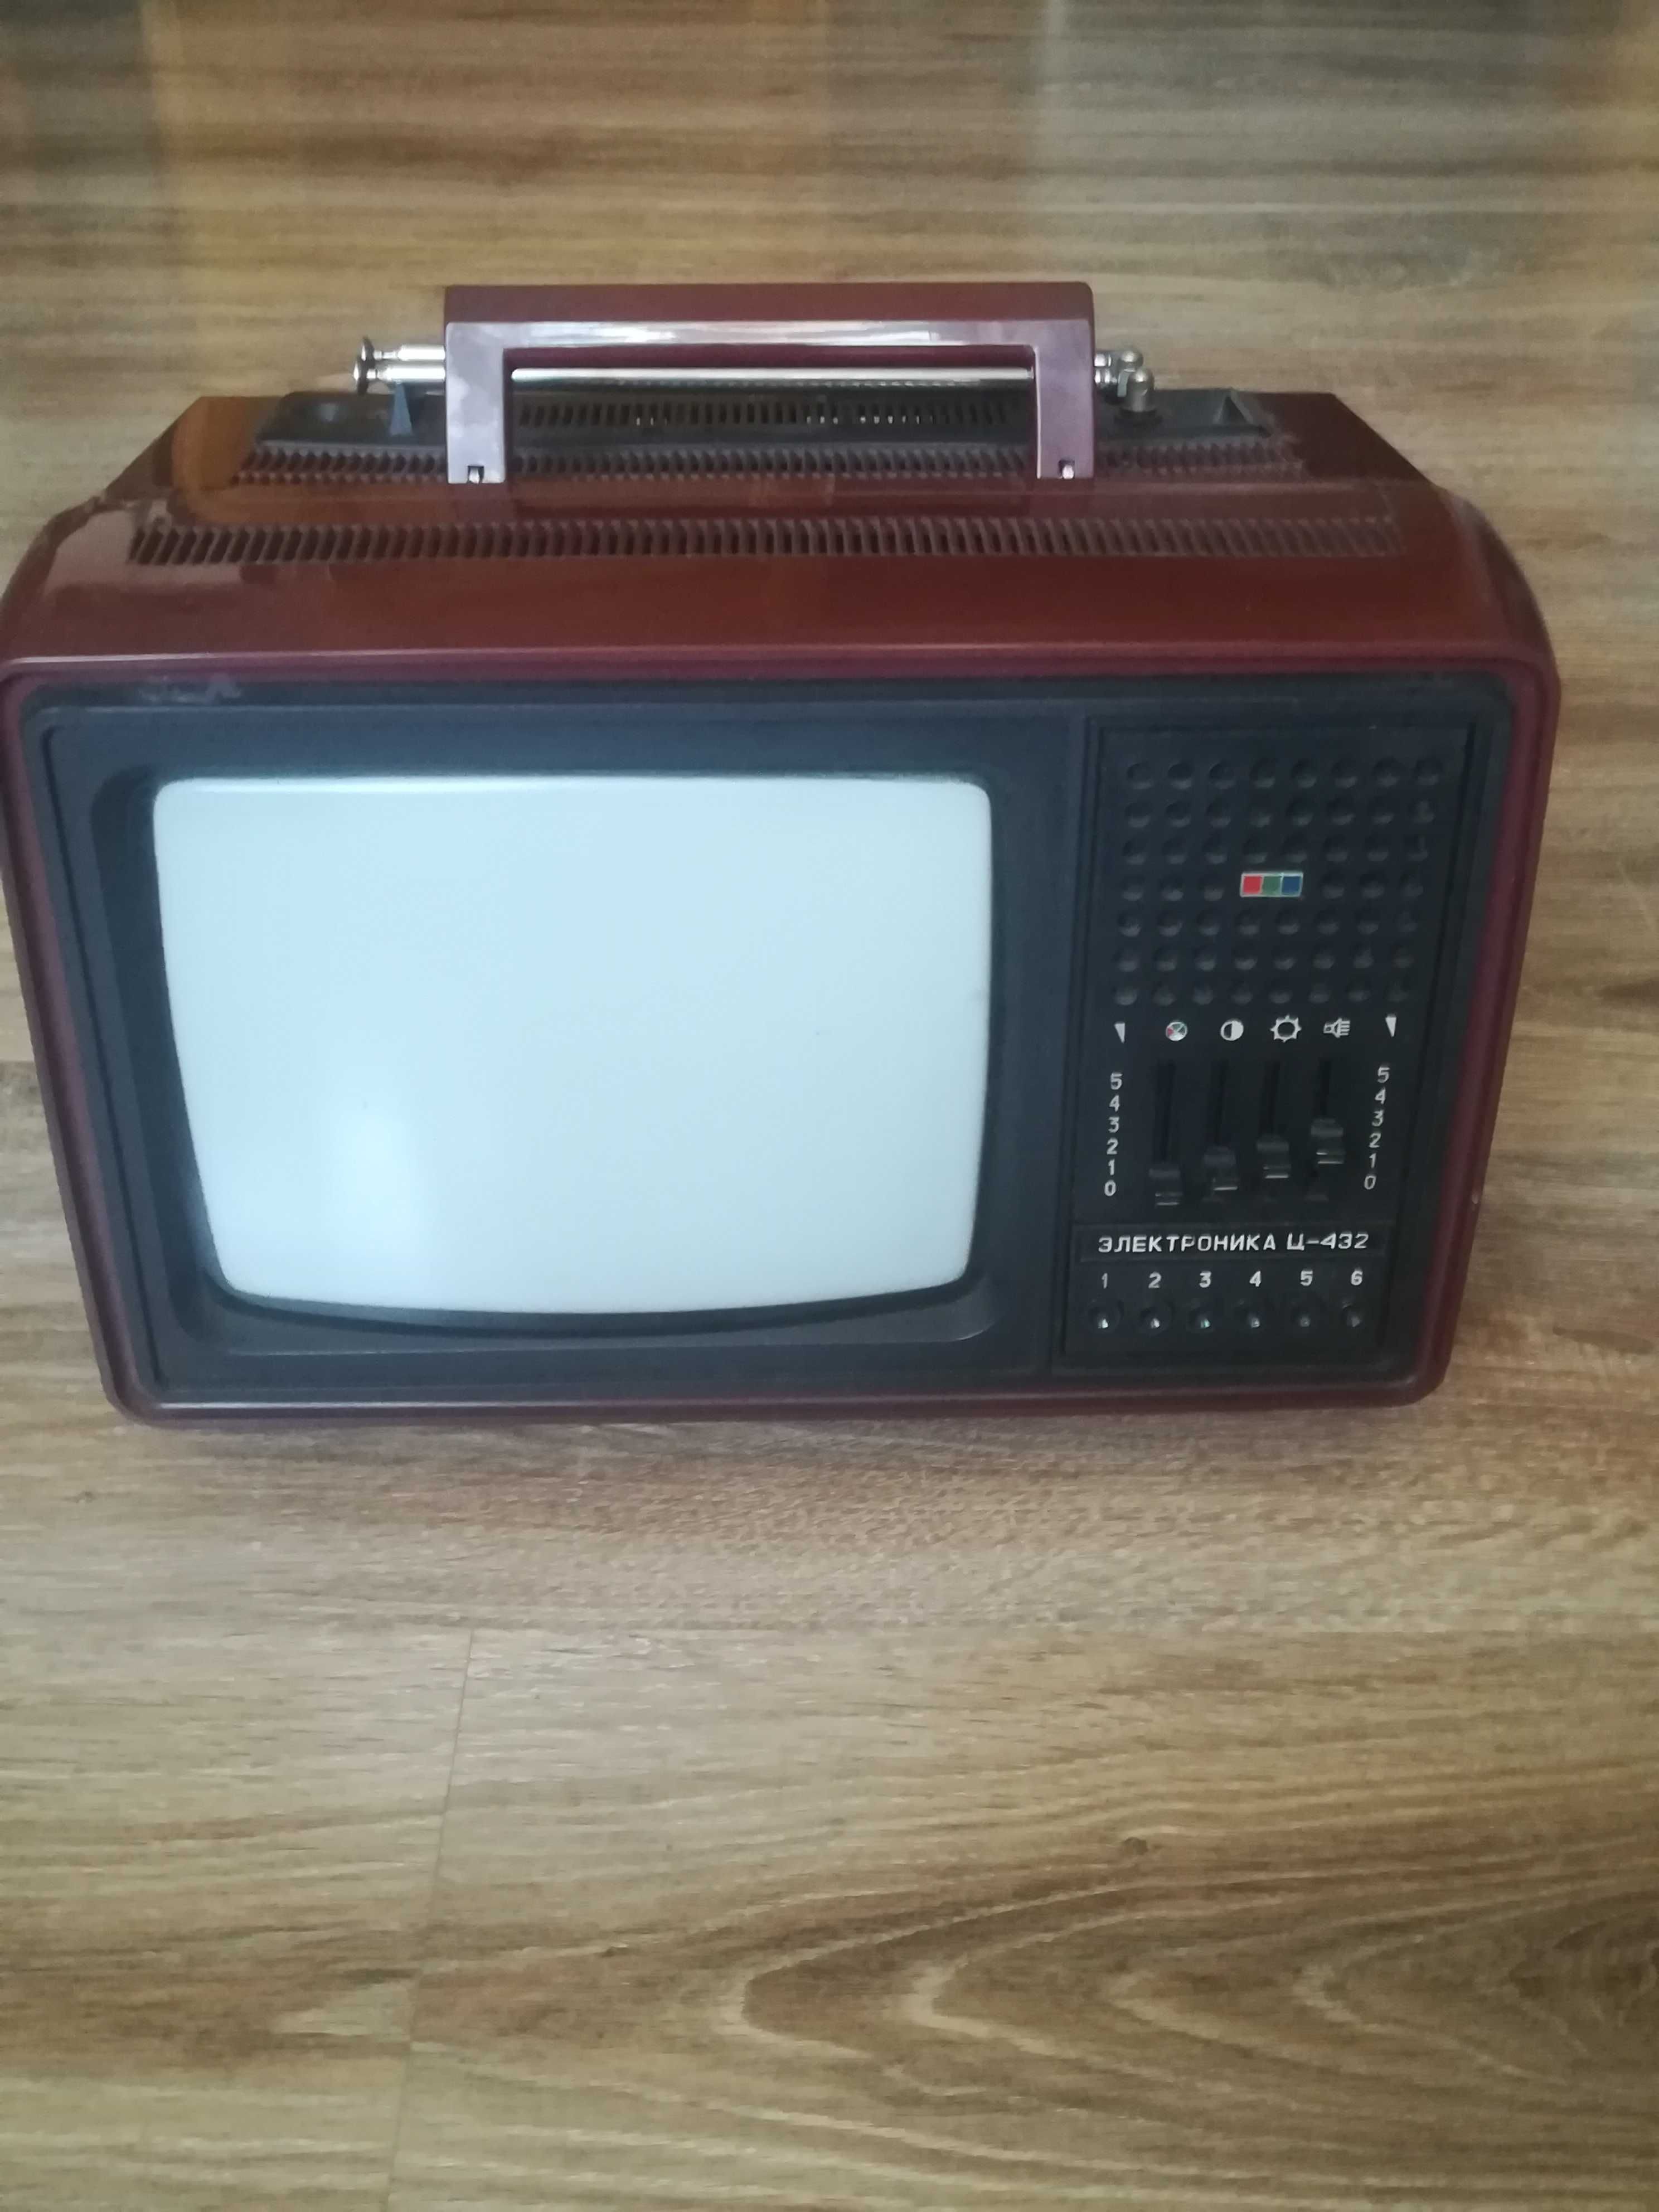 Telewizor PRL  z lat 80 Elektronika C-432